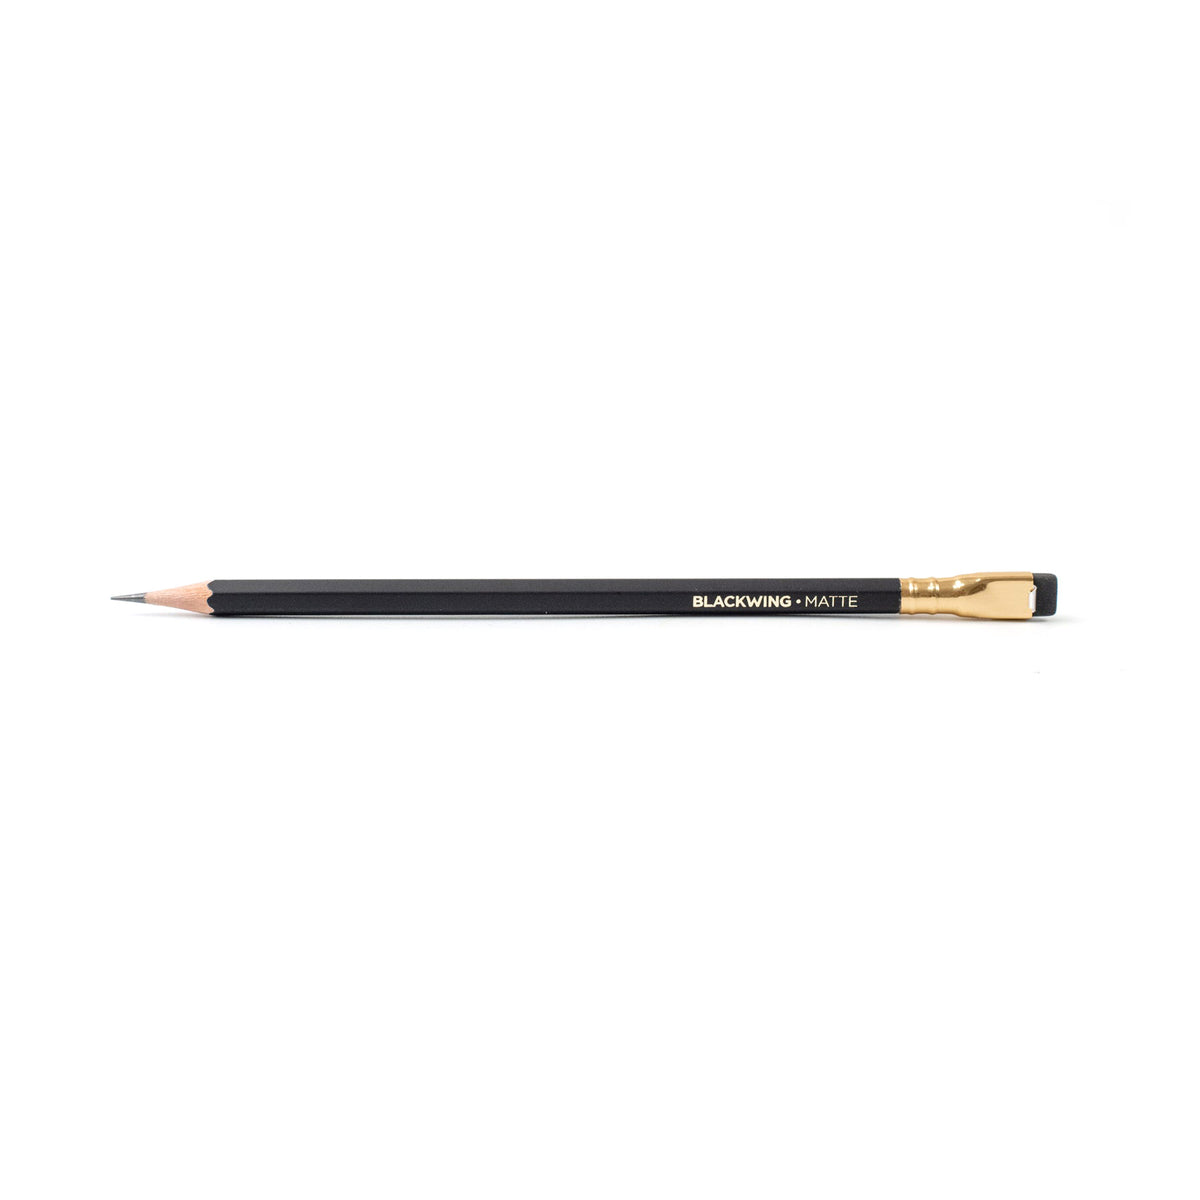 A single Blackwing graphite pencil.